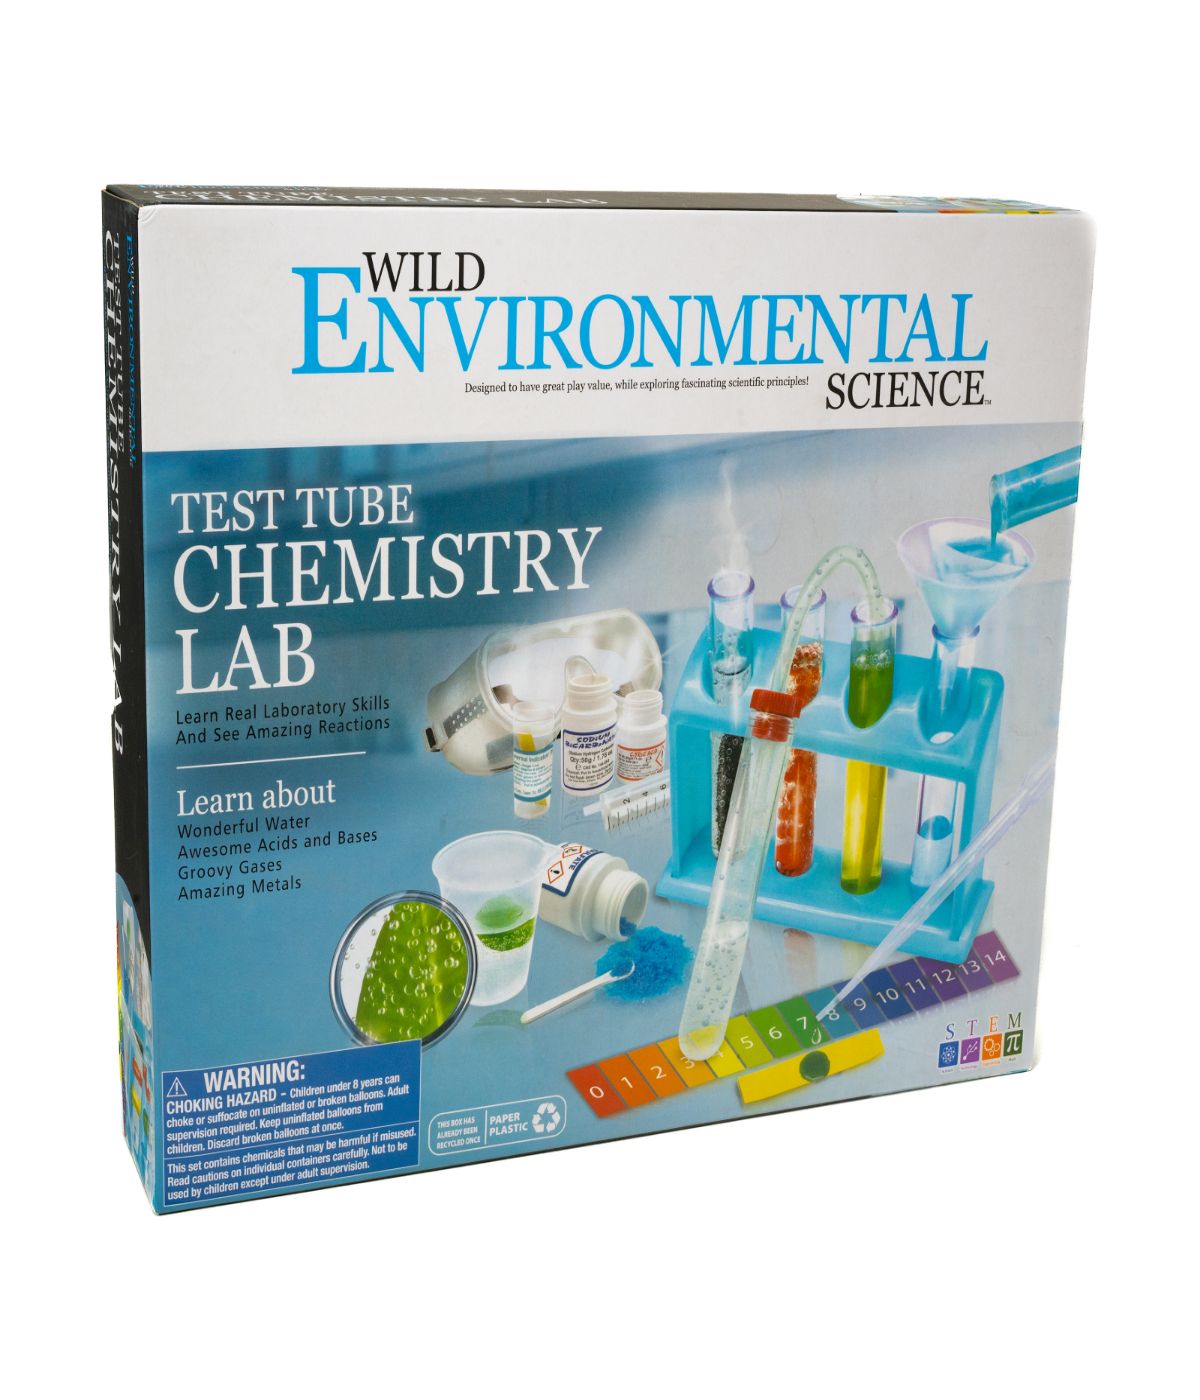 Wild Environmental Science - Test Tube Chemistry Lab Multi